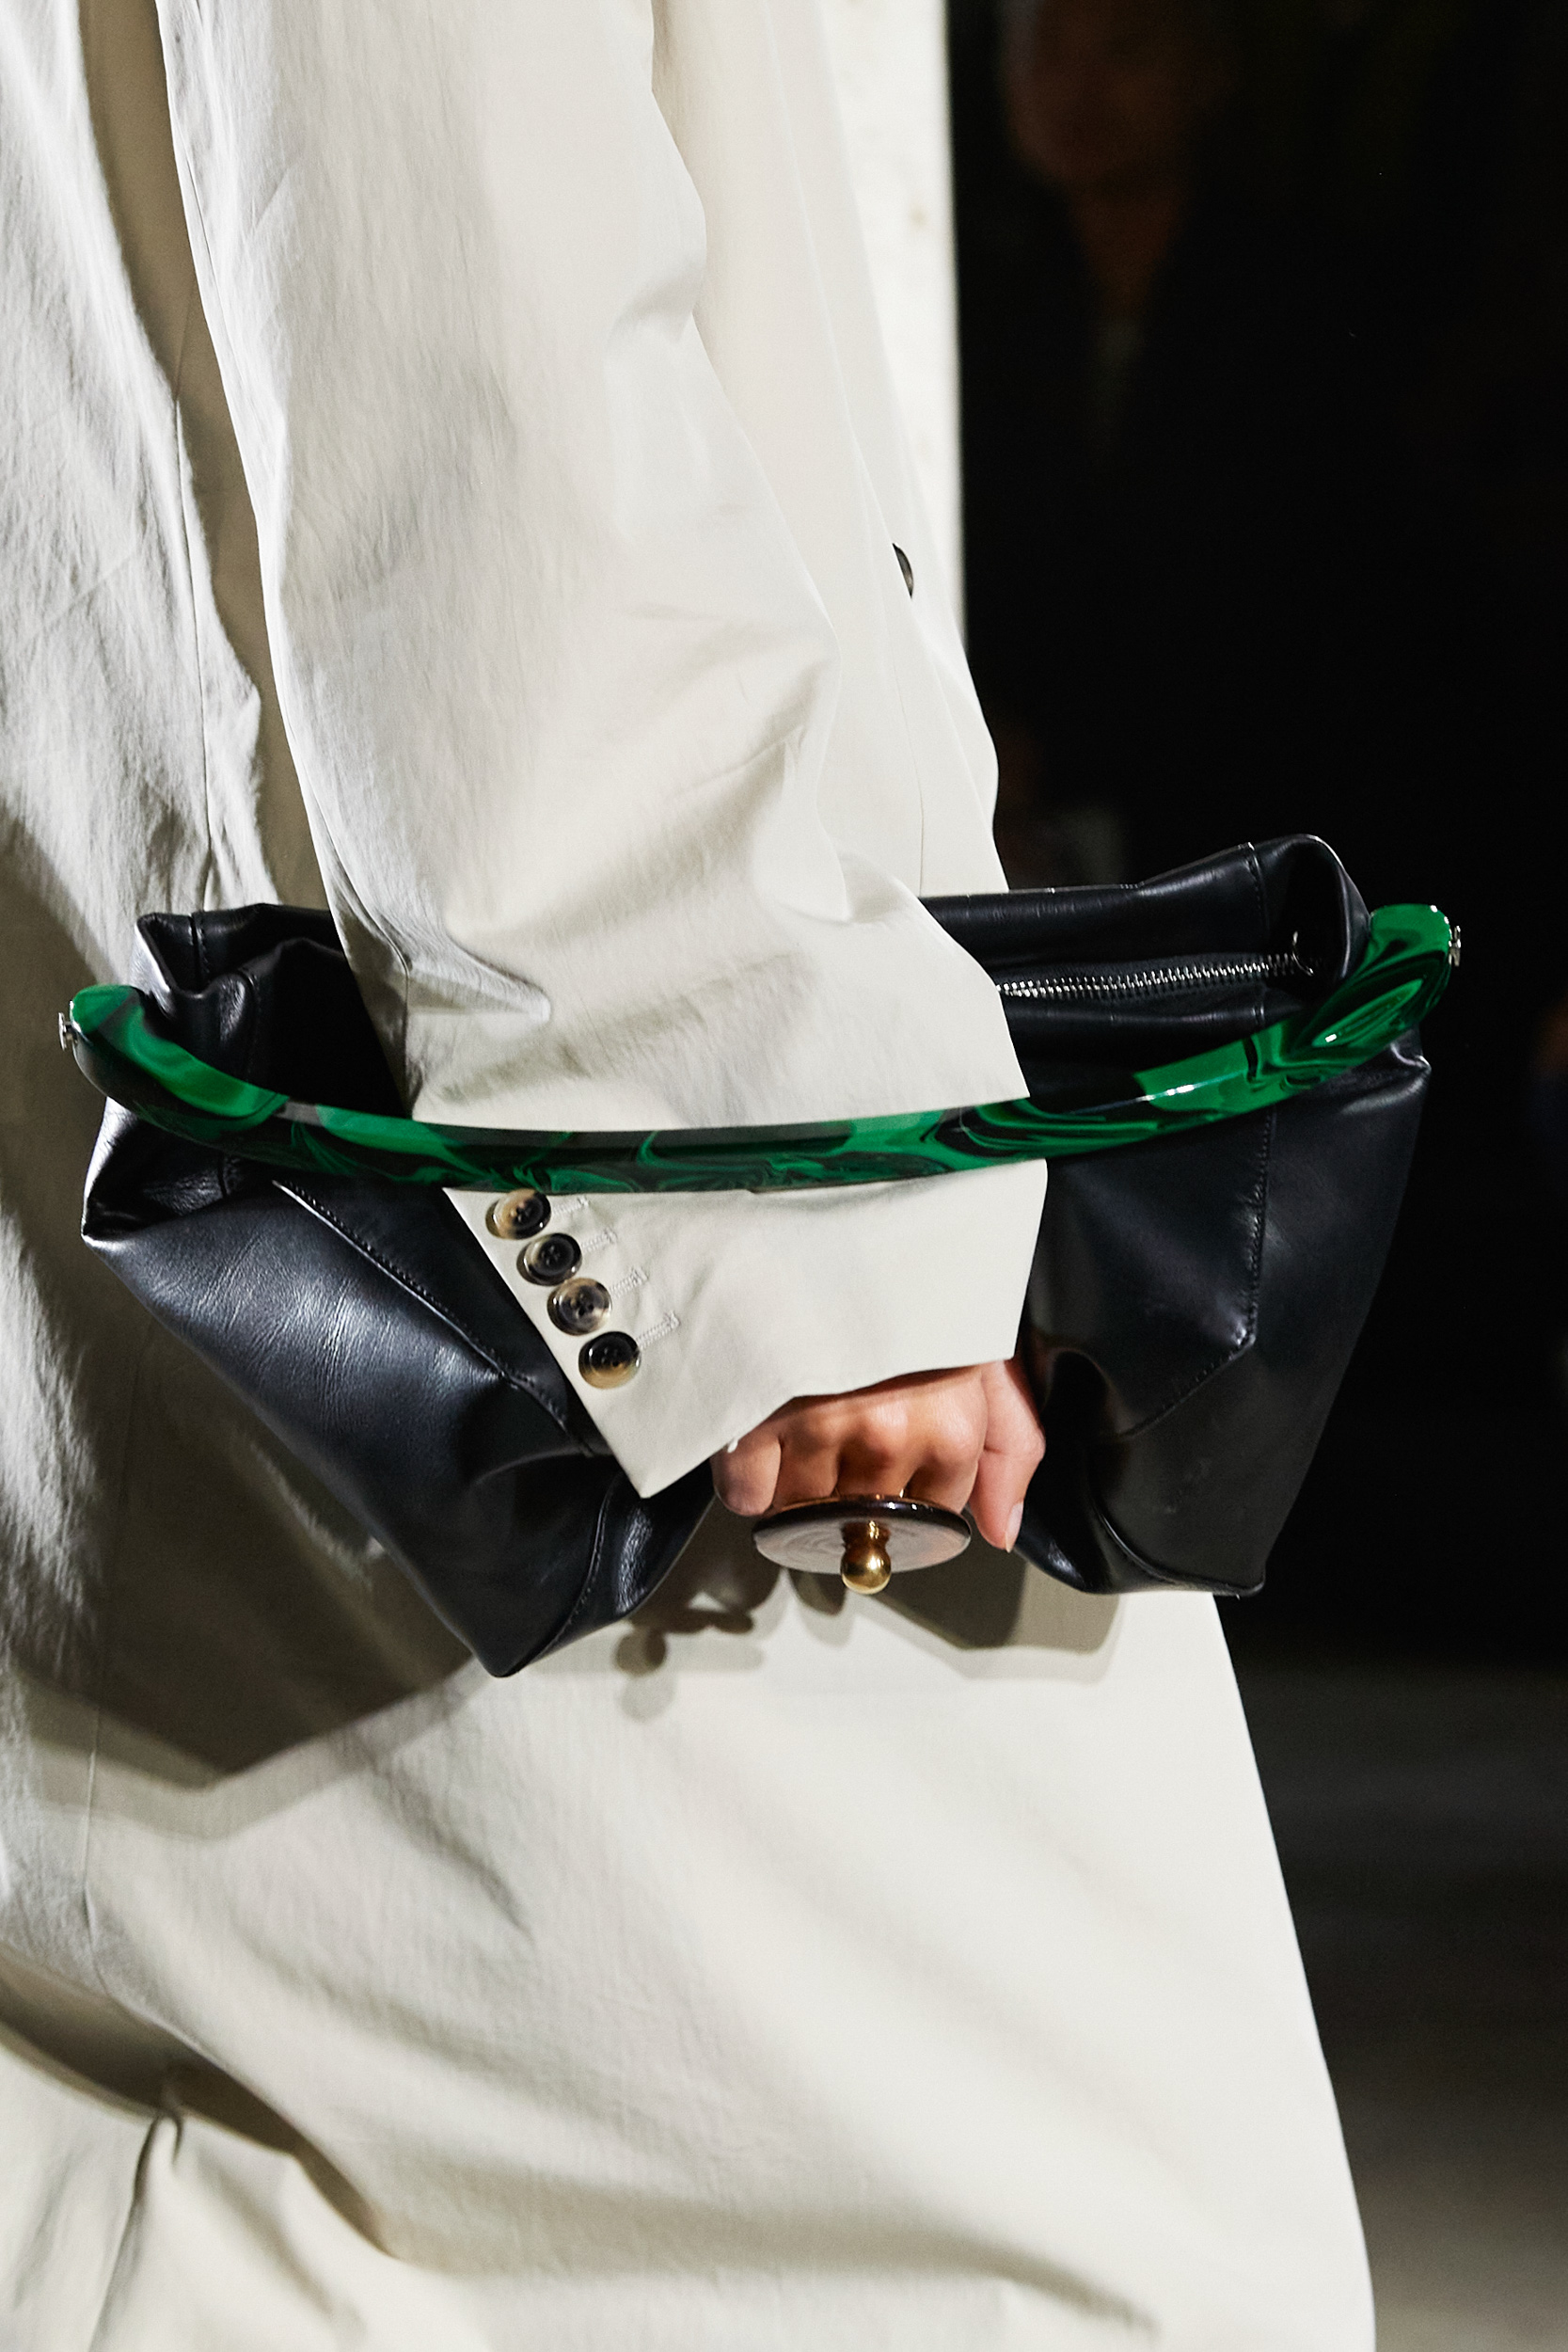 Dries Van Noten Spring 2023 Fashion Show Details | The Impression